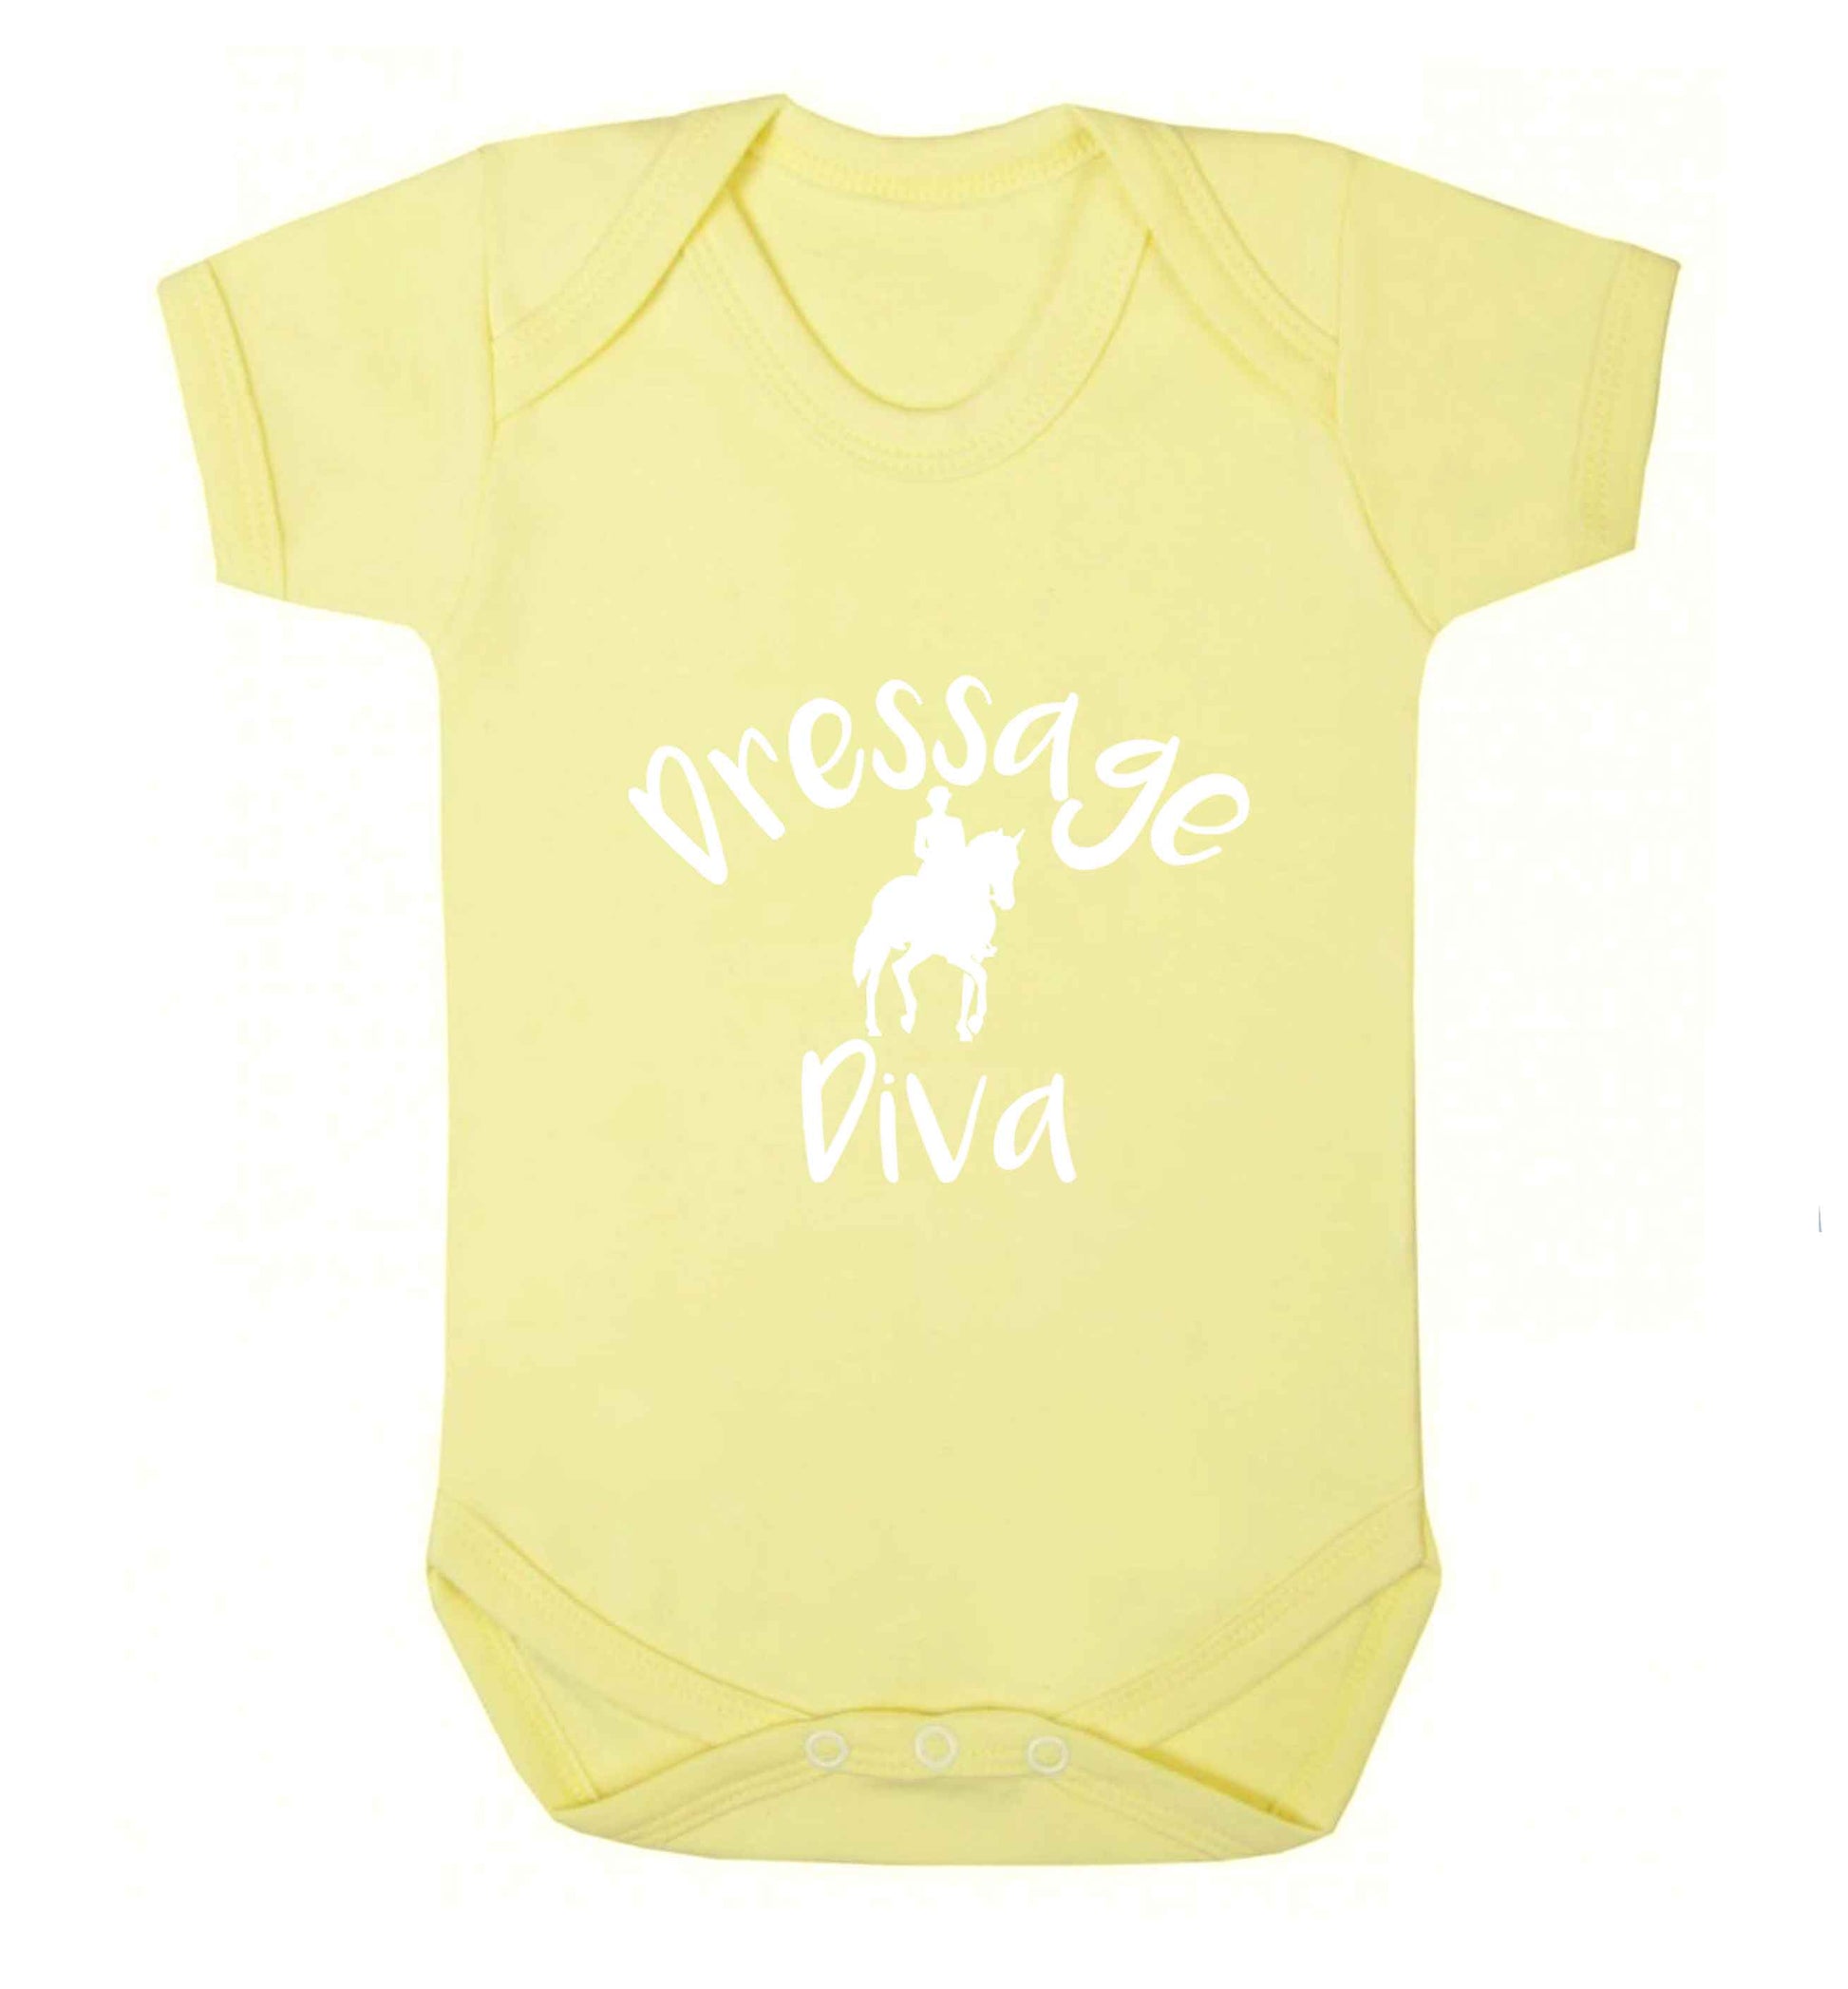 Dressage diva baby vest pale yellow 18-24 months